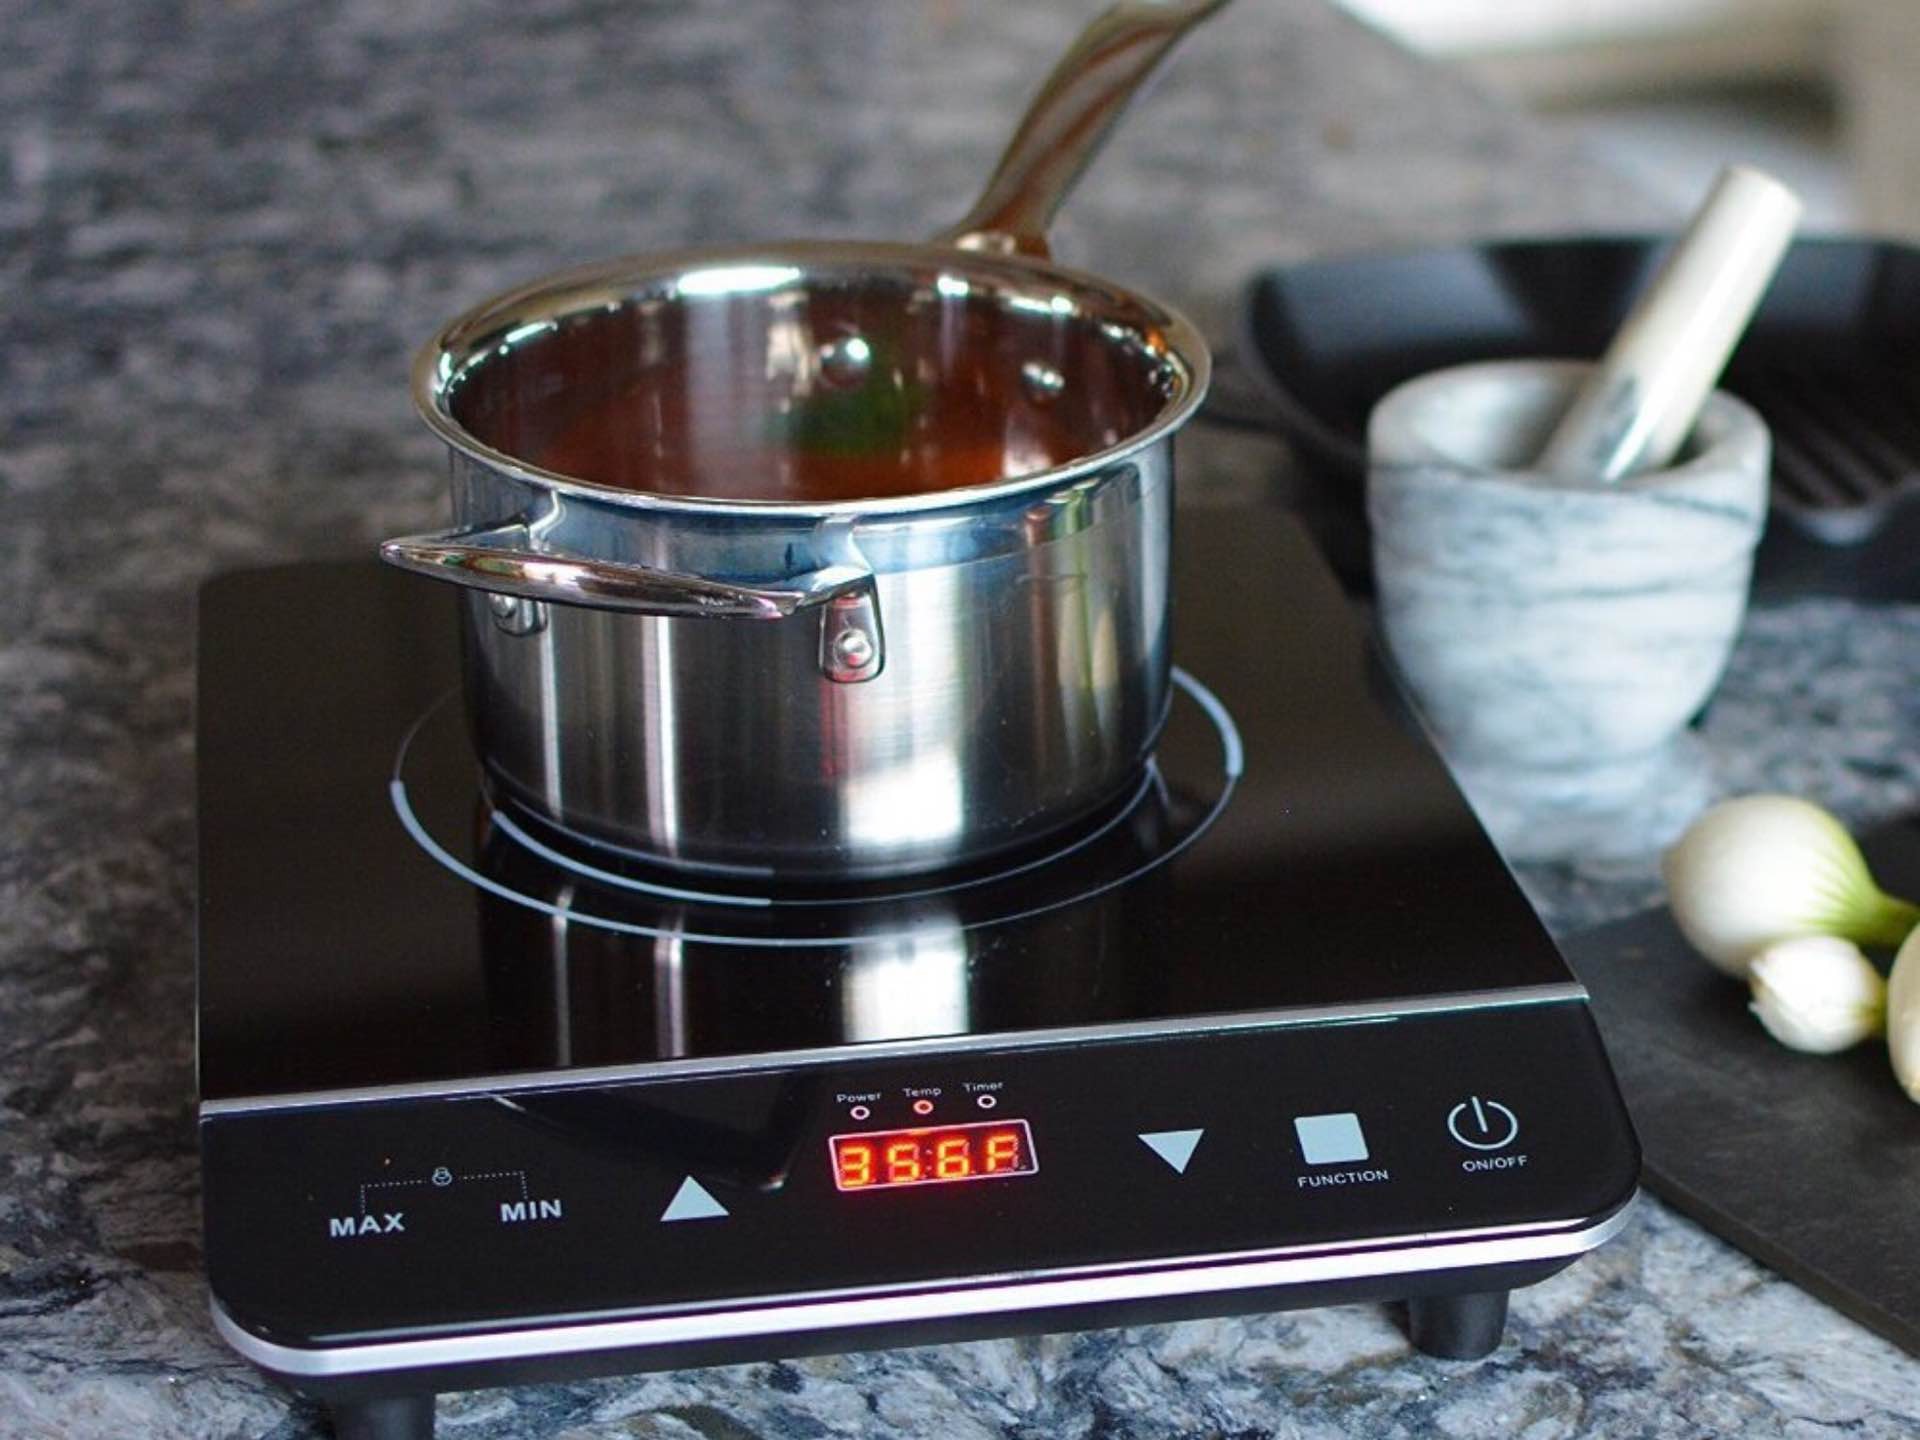 Induxpert portable induction cooktop. ($40)